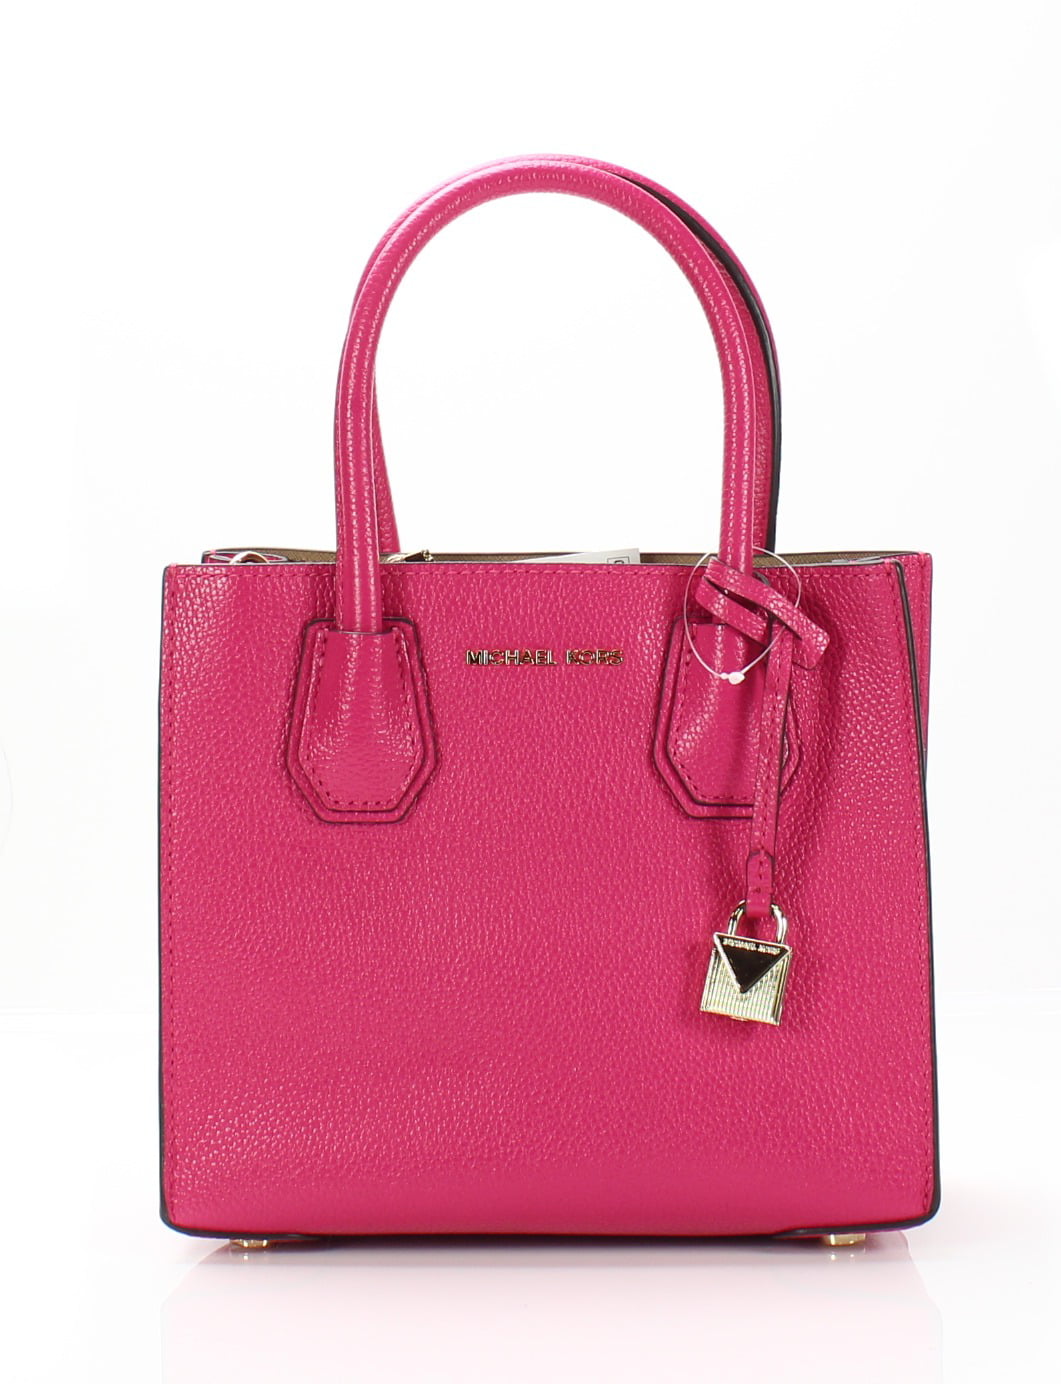 Michael Kors - NEW Ultra Pink Mercer Medium Pebble Leather Crossbody Bag - www.bagsaleusa.com - www.bagsaleusa.com